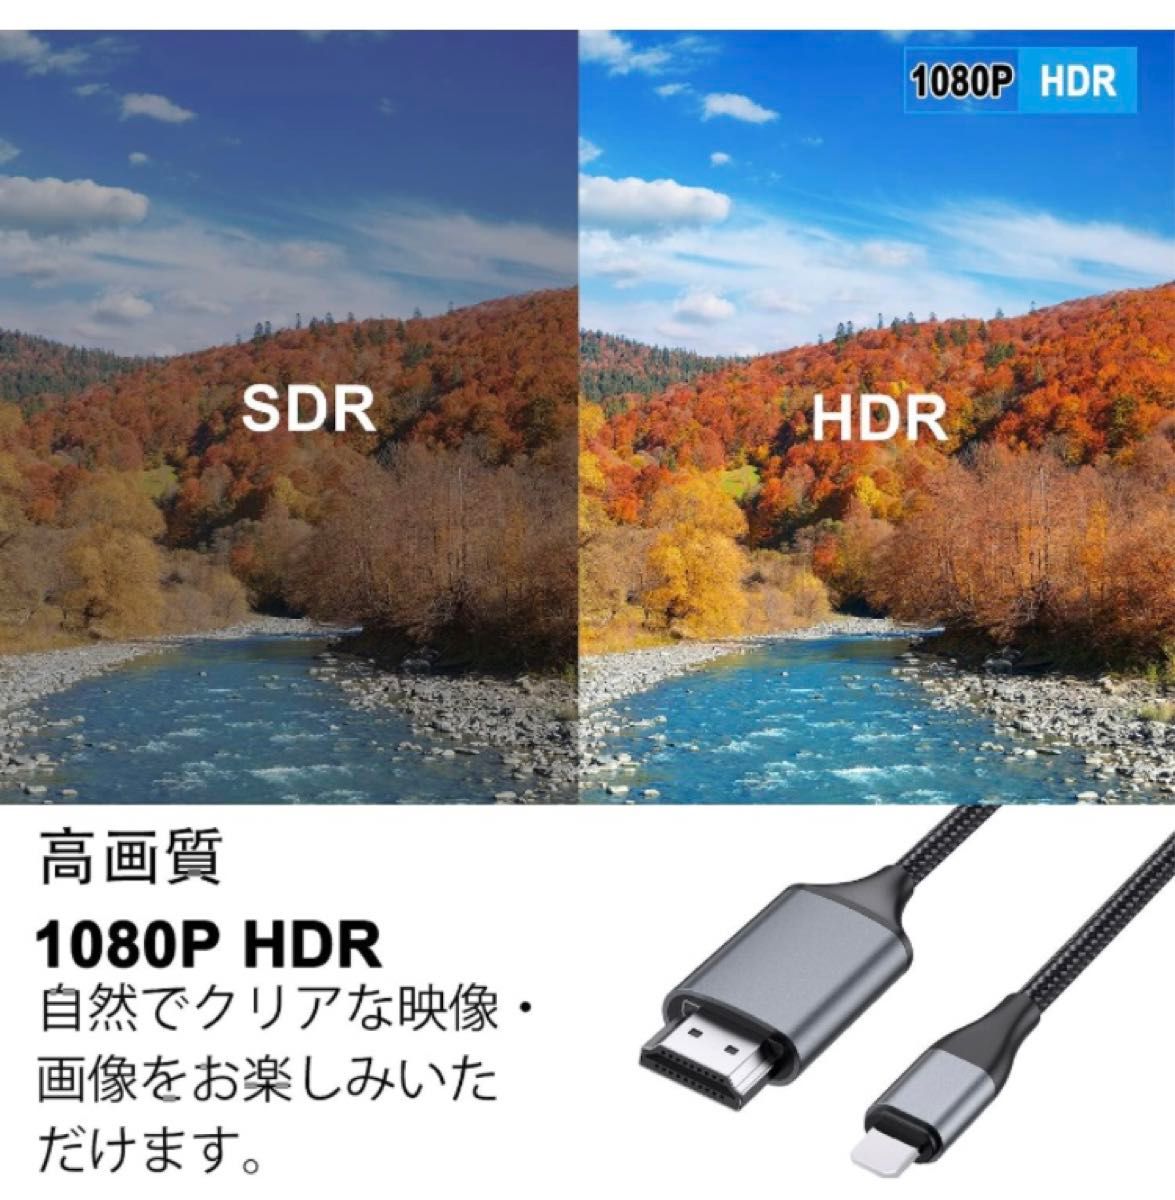 HDMIケーブル phone hdmi変換ケーブル Digital AV変換アダプタ TV出力 電源不要 2mグレー